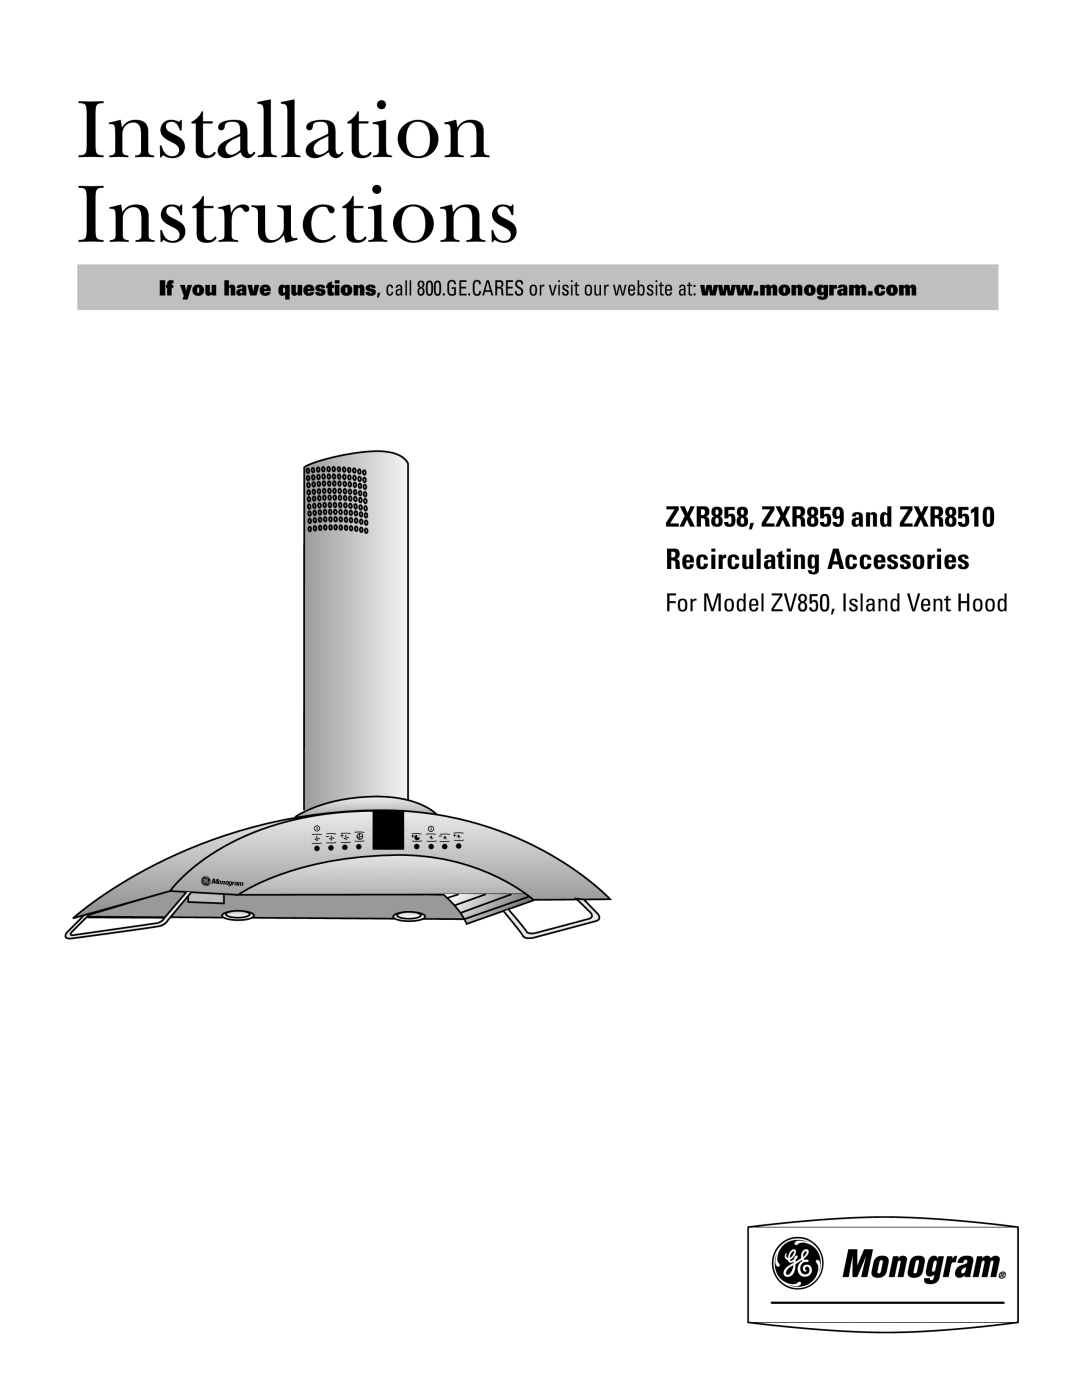 GE Monogram ZXR858, ZXR859, ZXR8510 installation instructions Installation Instructions, For Model ZV850, Island Vent Hood 